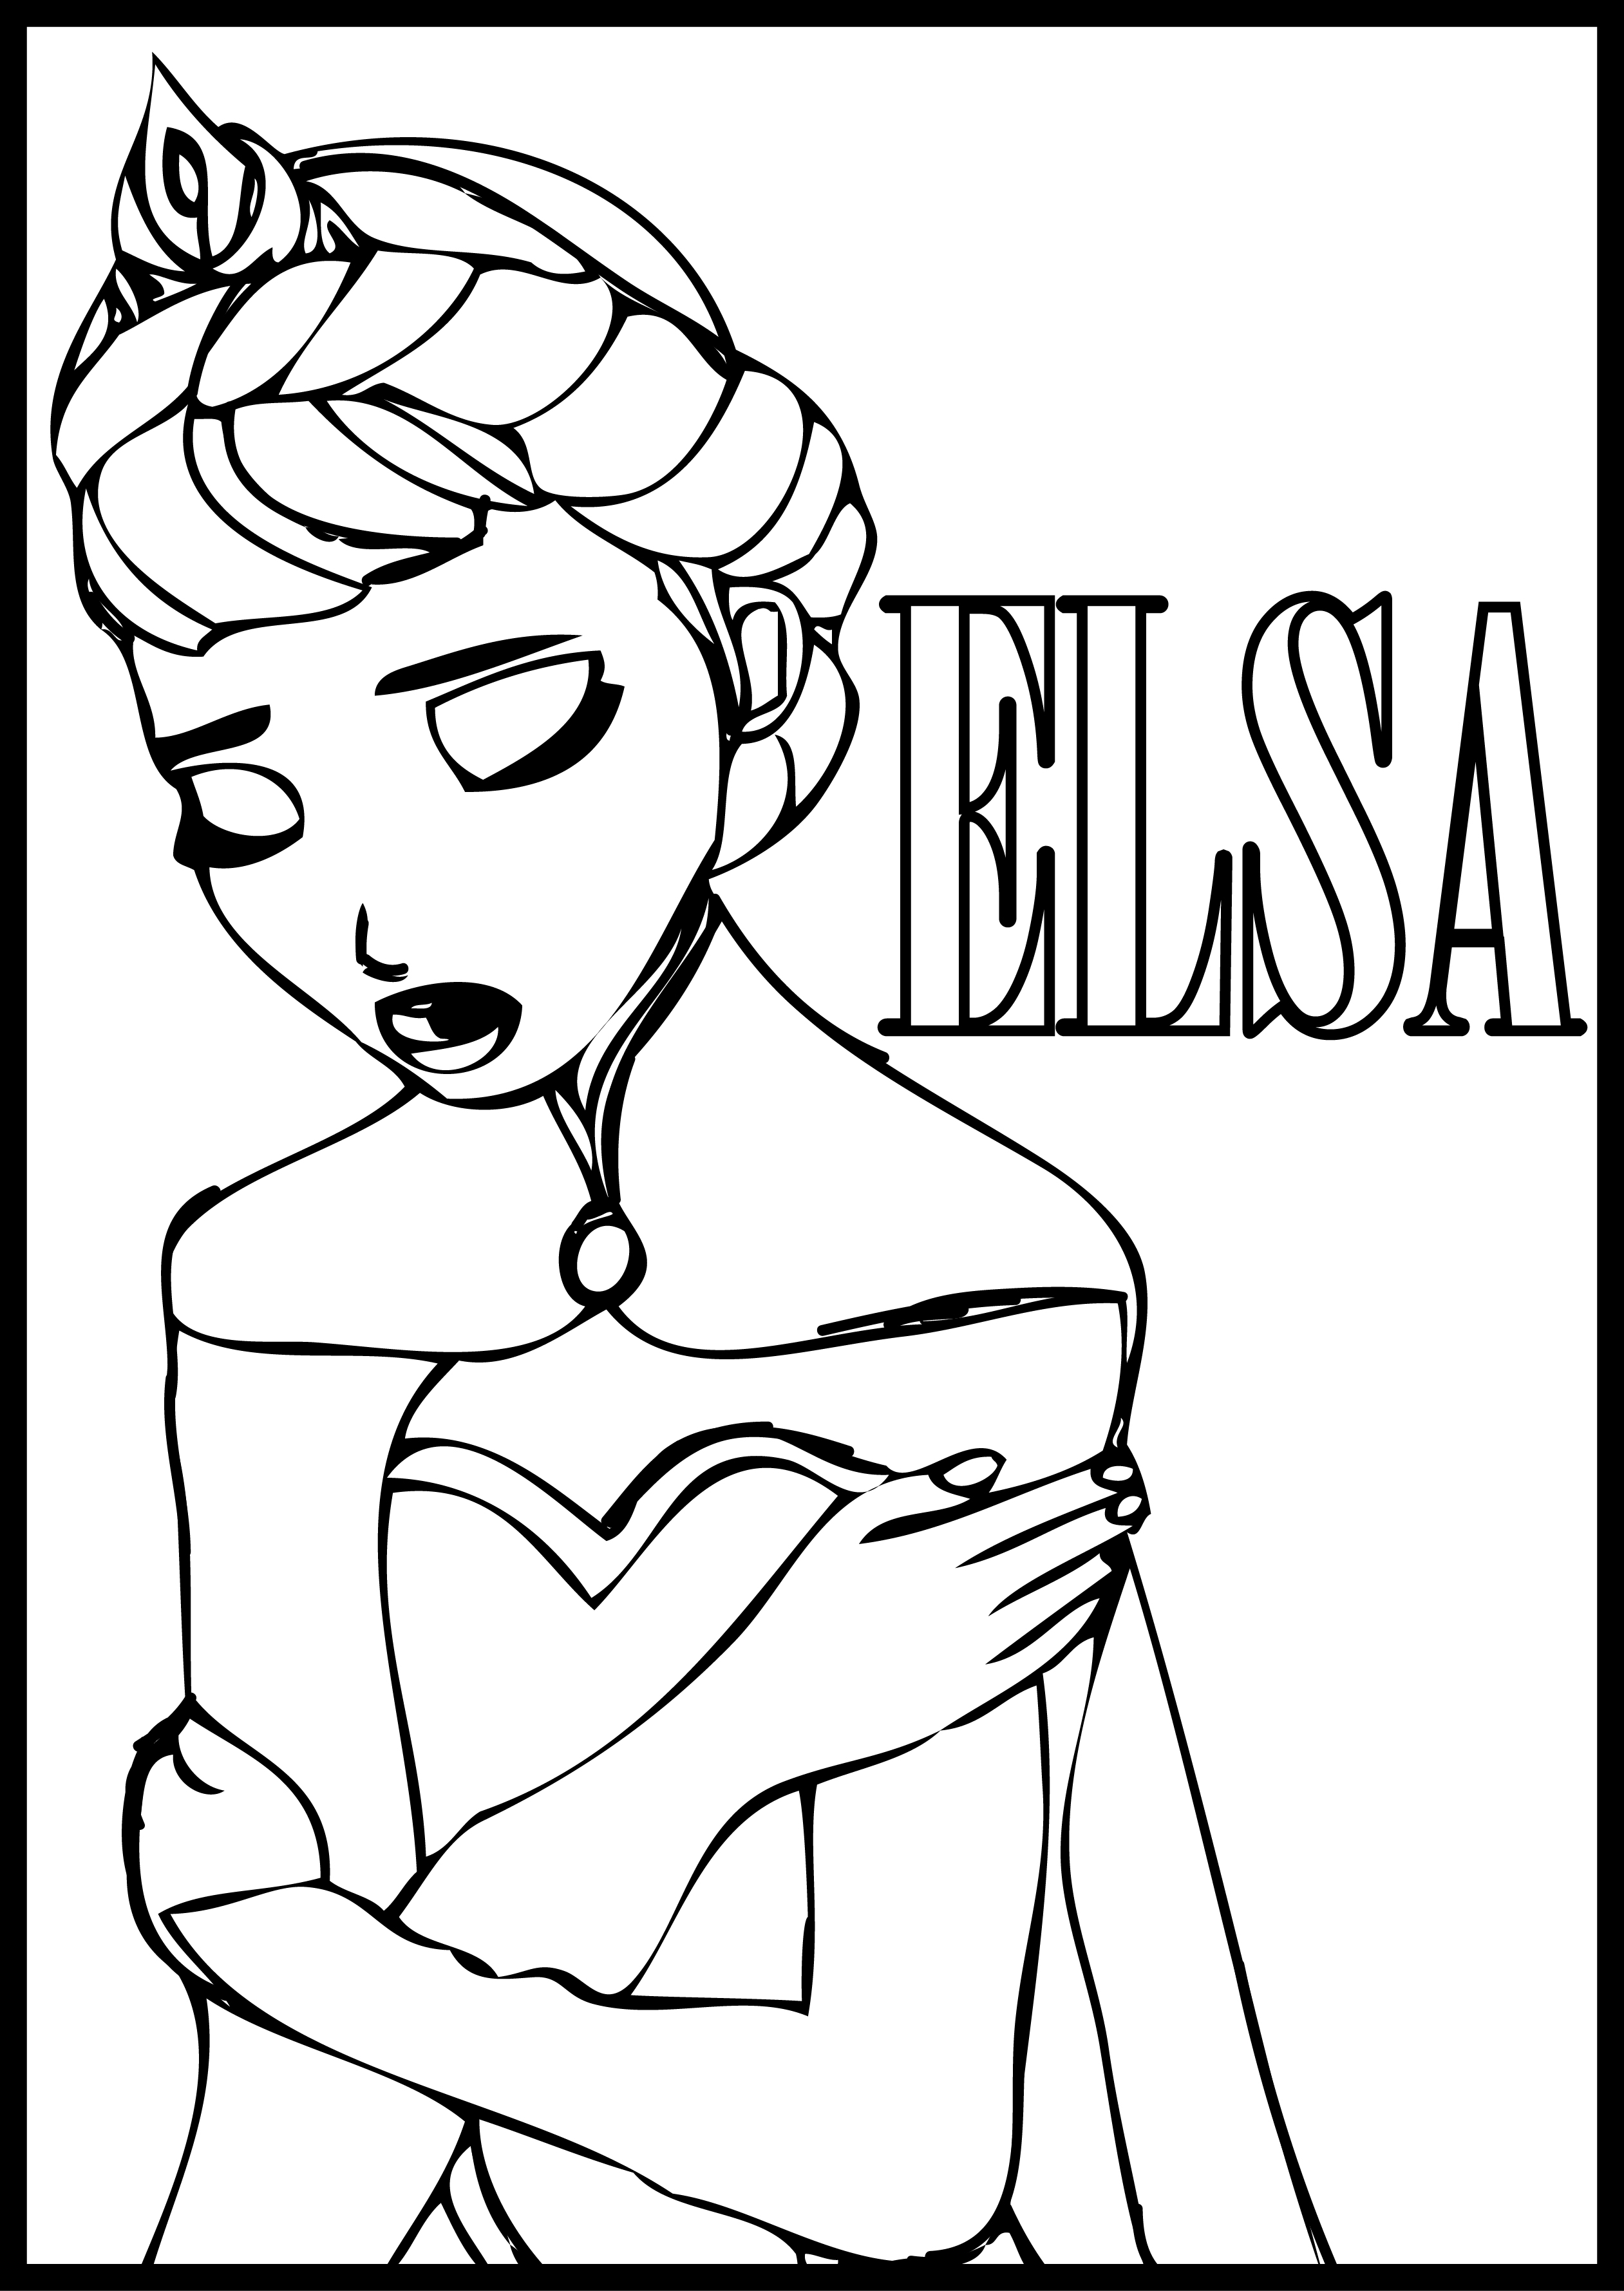 Free Printable Elsa Coloring Pages at GetDrawings | Free ...